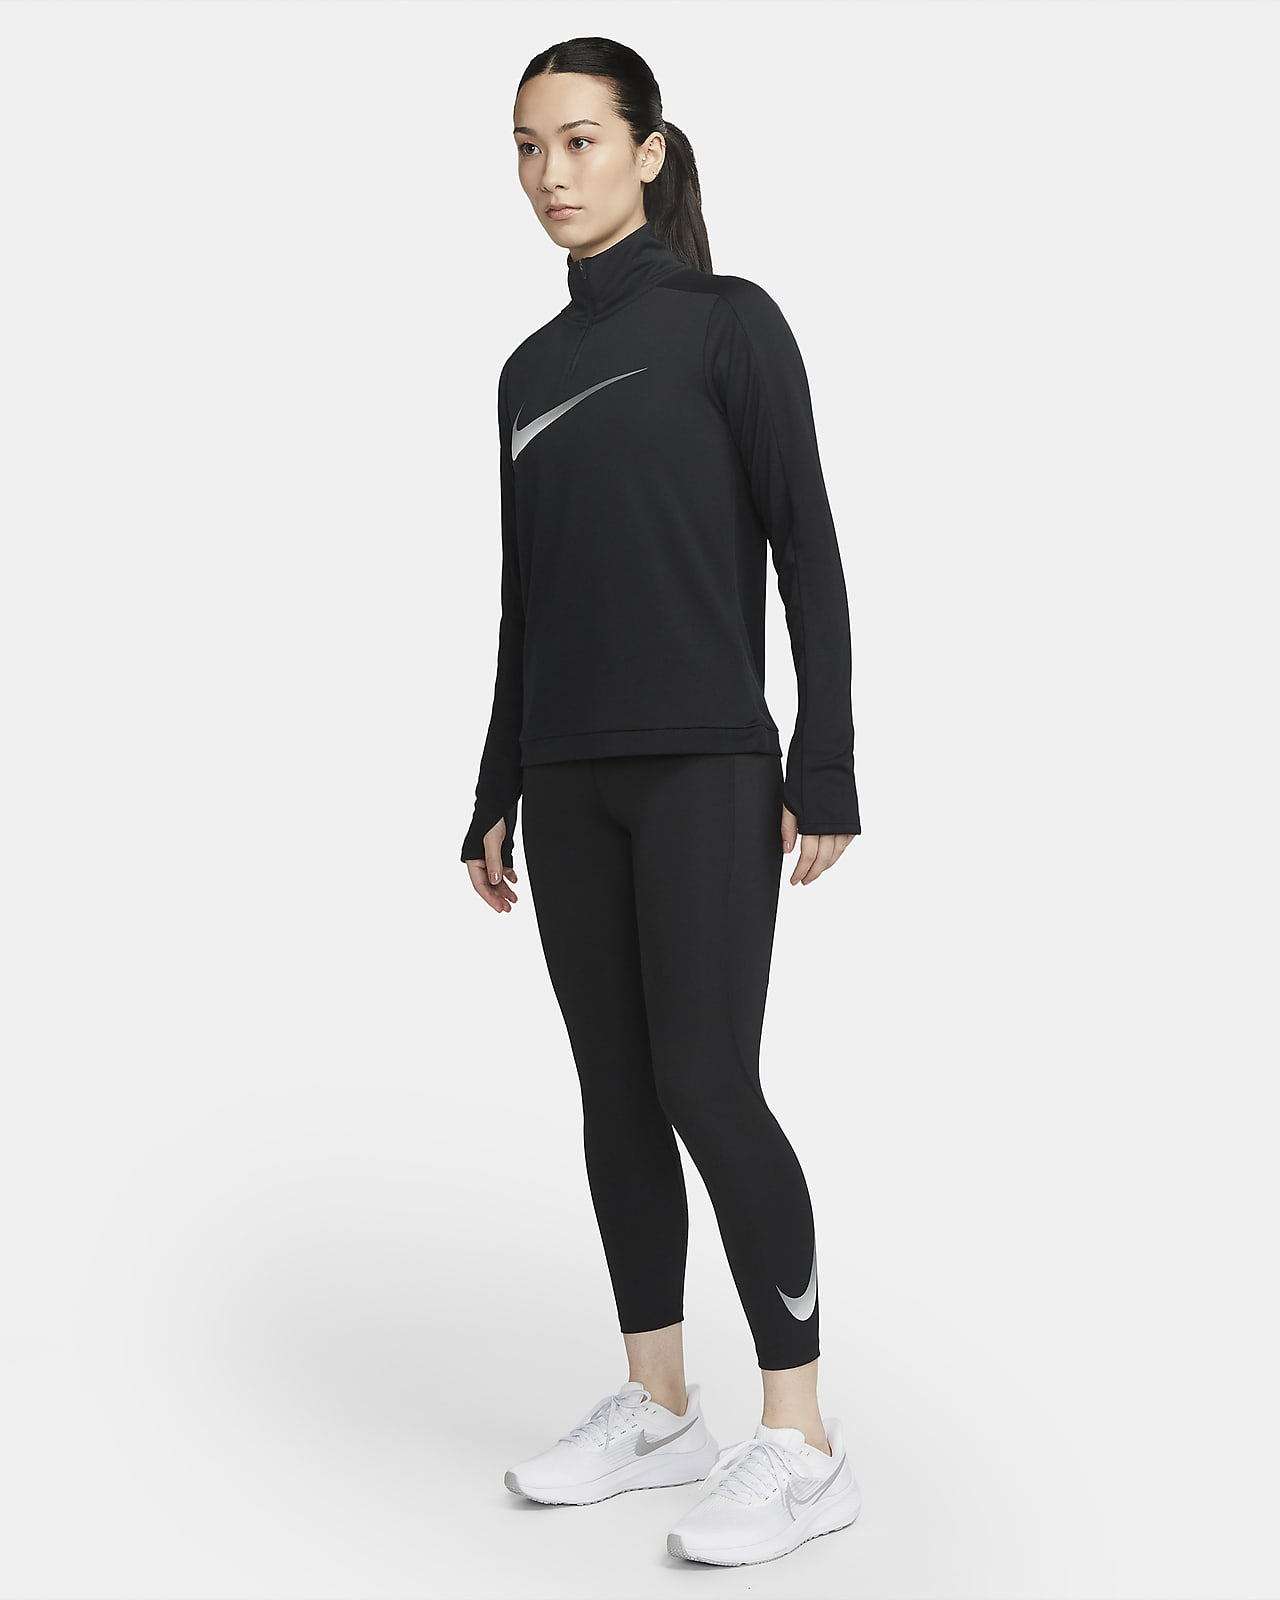 Nike Faster Running Leggings Womens Black/Grey, £30.00